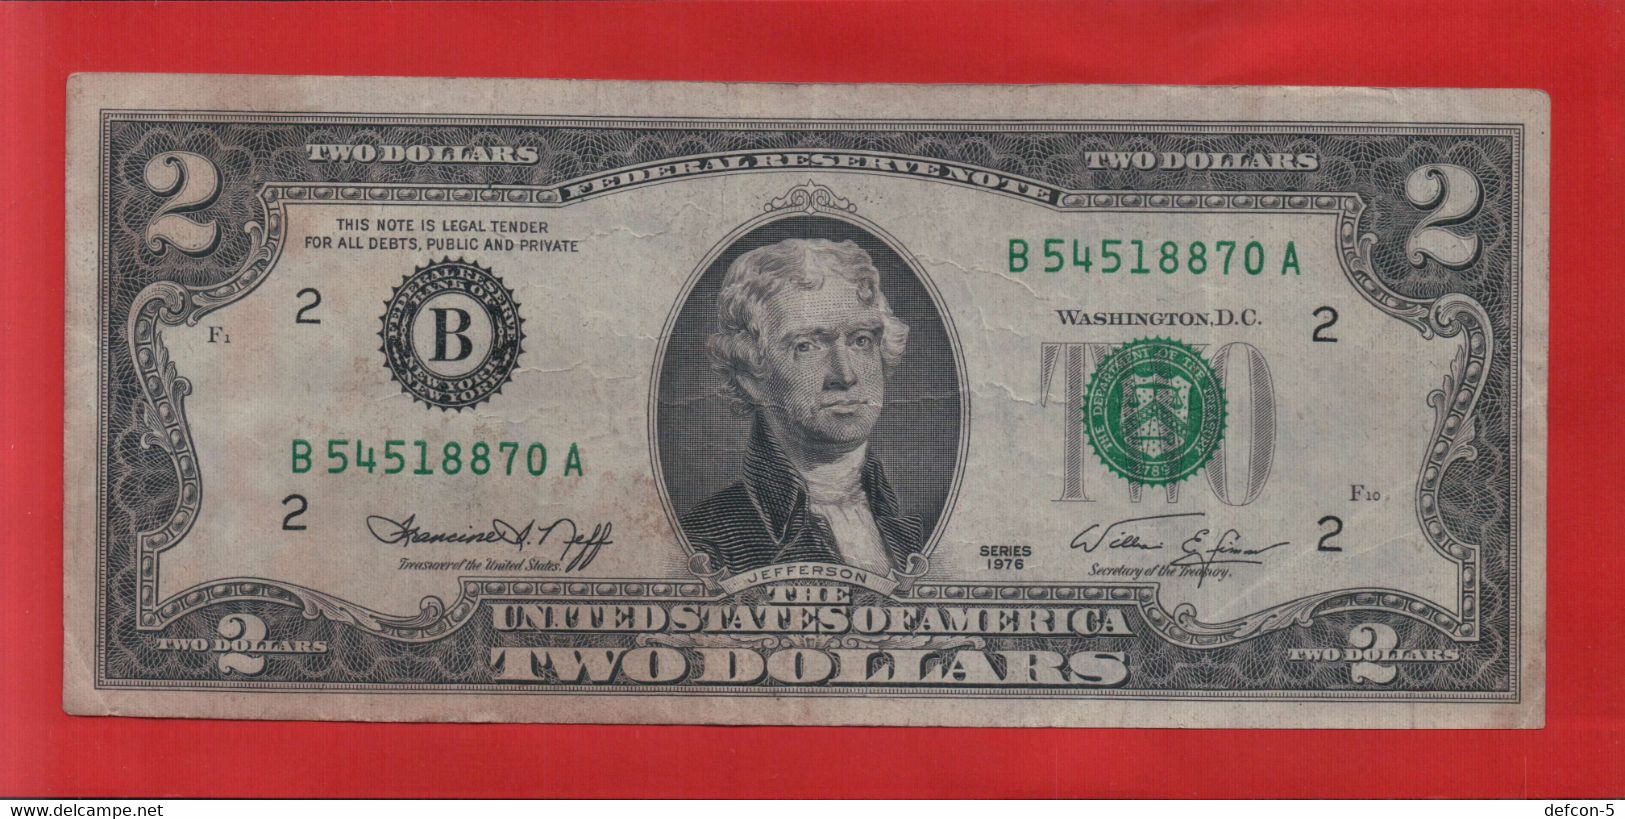 Rarität ! 2 US-Dollar [1976] > B 54518870 A < {$018-002} - Devise Nationale